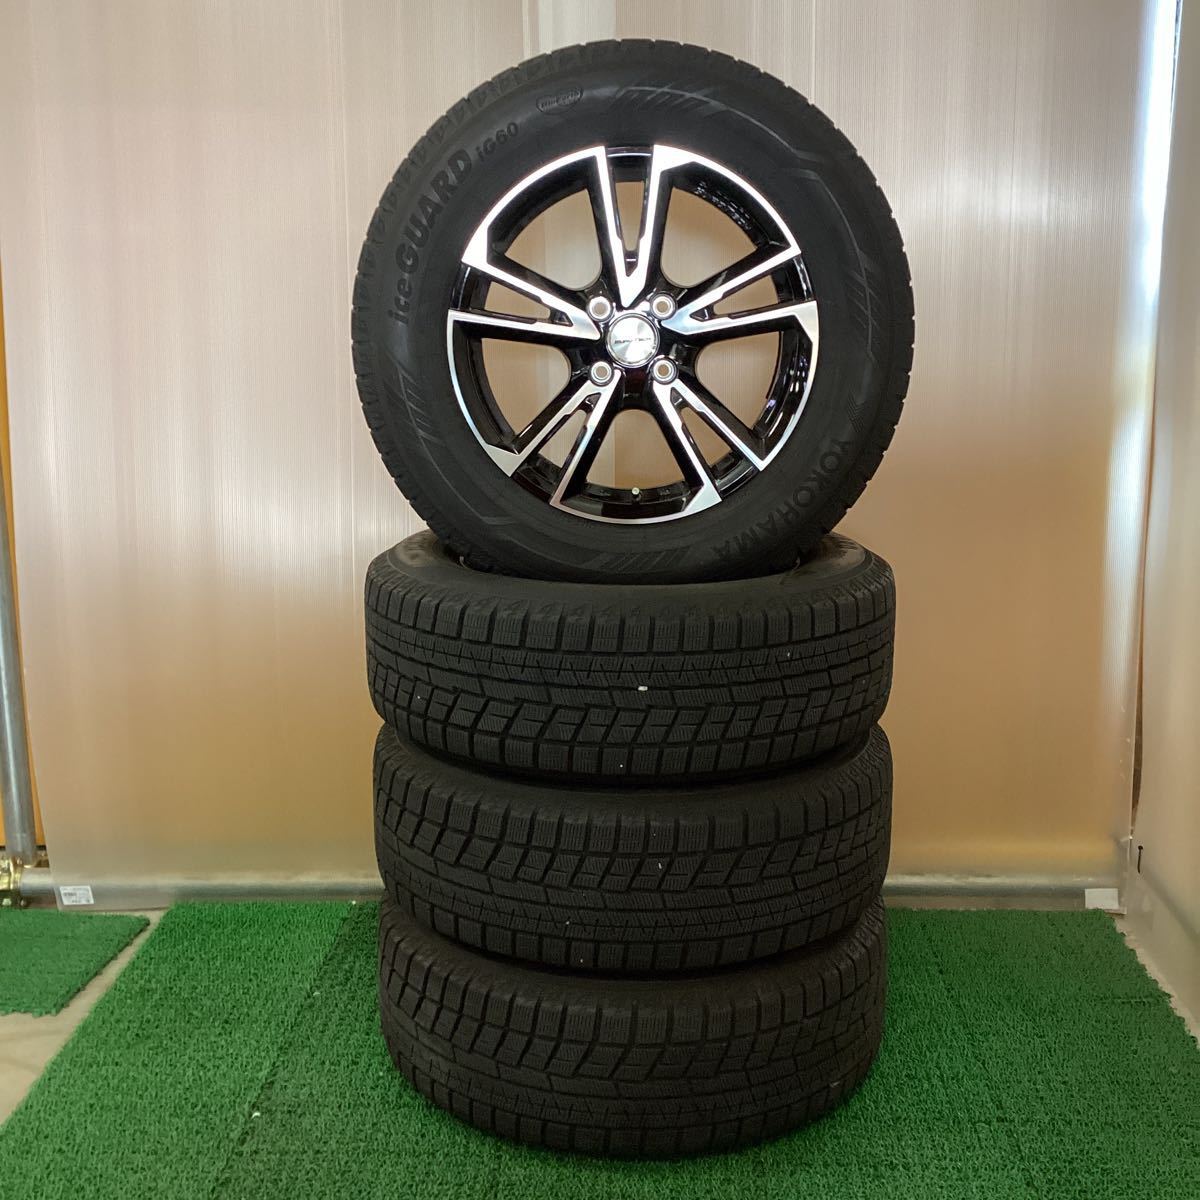  studless Peugeot non-genuine aluminum wheel set 16×6.5J+38 108-4H secondhand goods 4ps.@[489]